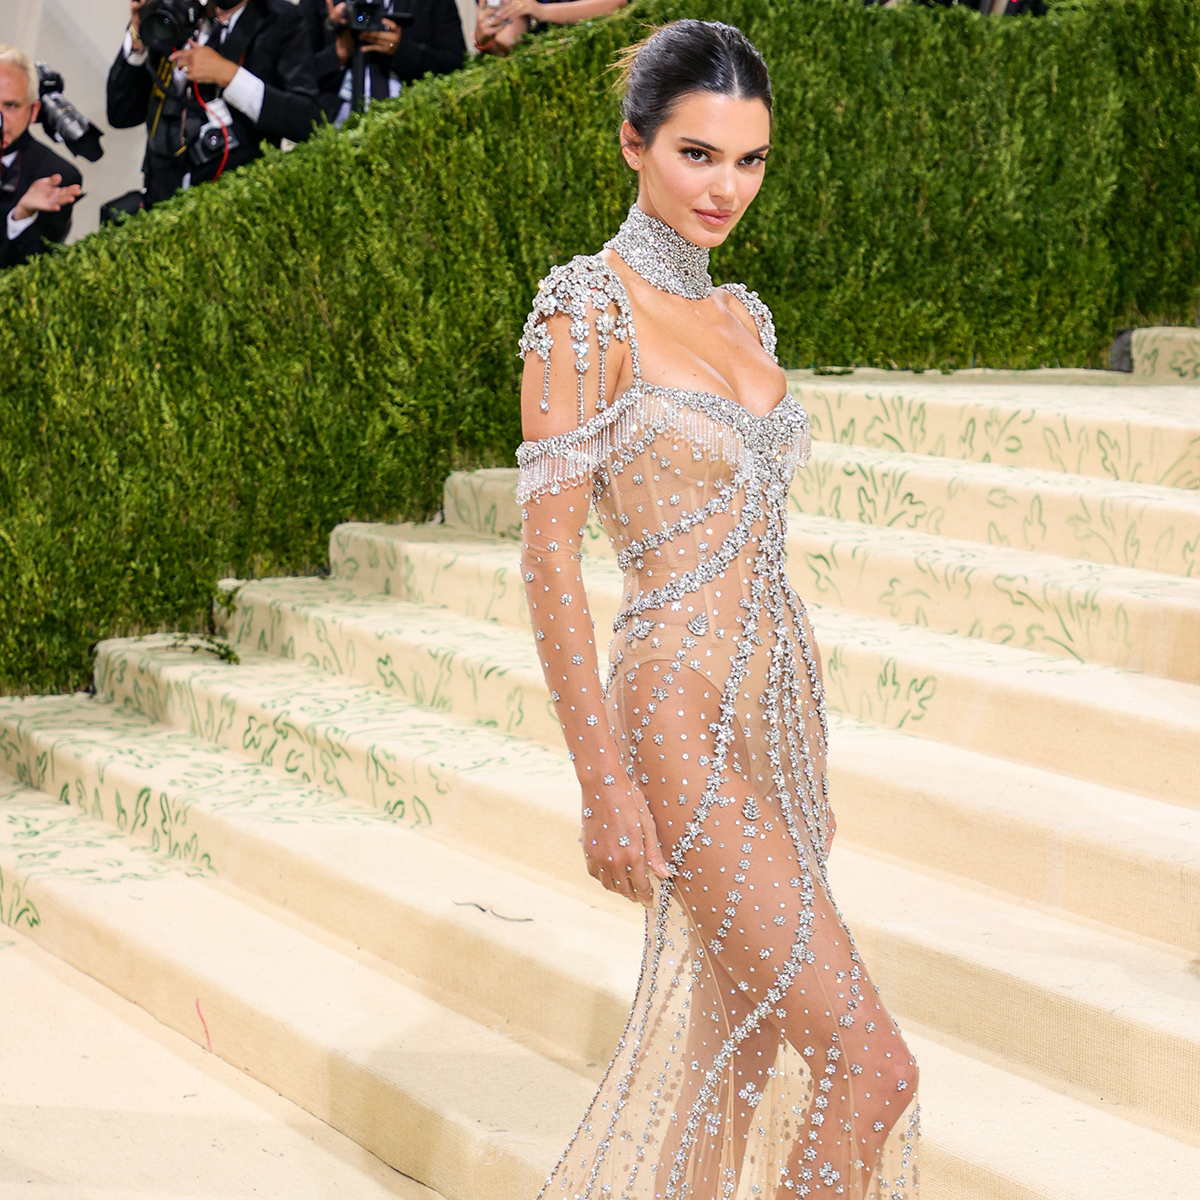 Jennifer Lopez Wears Double-Slit Dress Kendall Jenner Made Famous